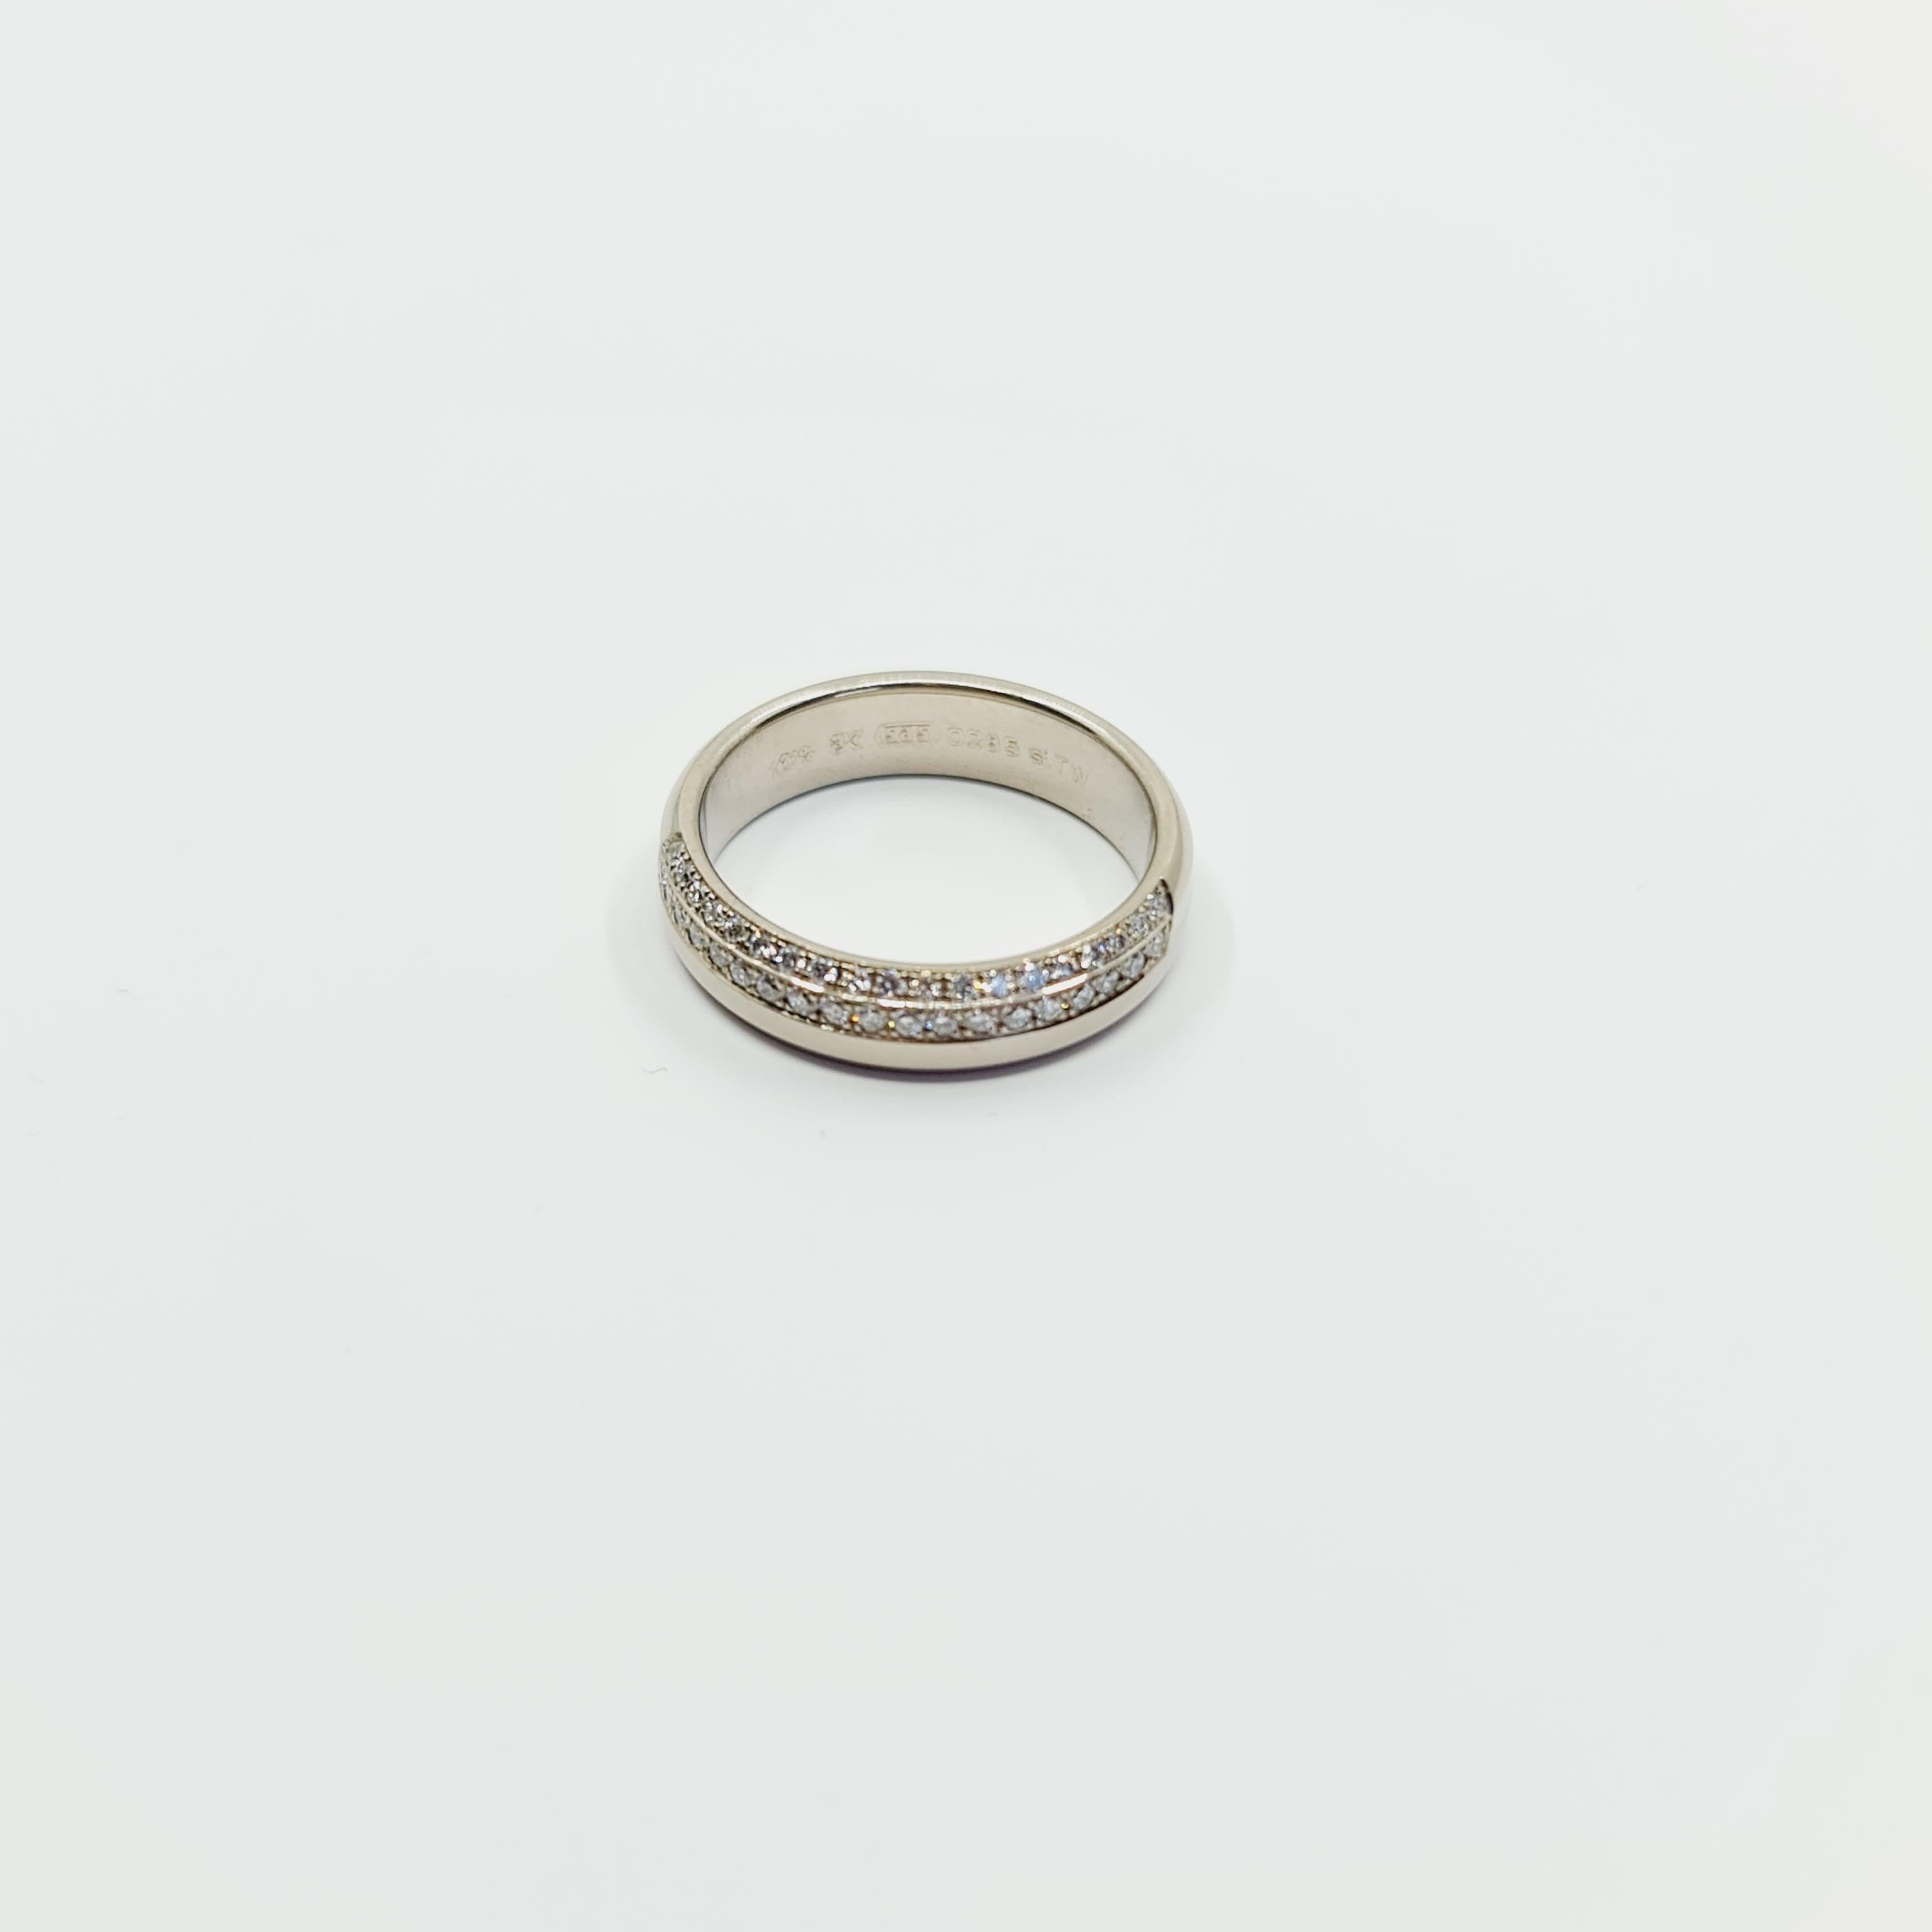 0.285 Carat Diamond Ring G/VS 14k White Gold, Brilliant Cut Pave Diamonds For Sale 3